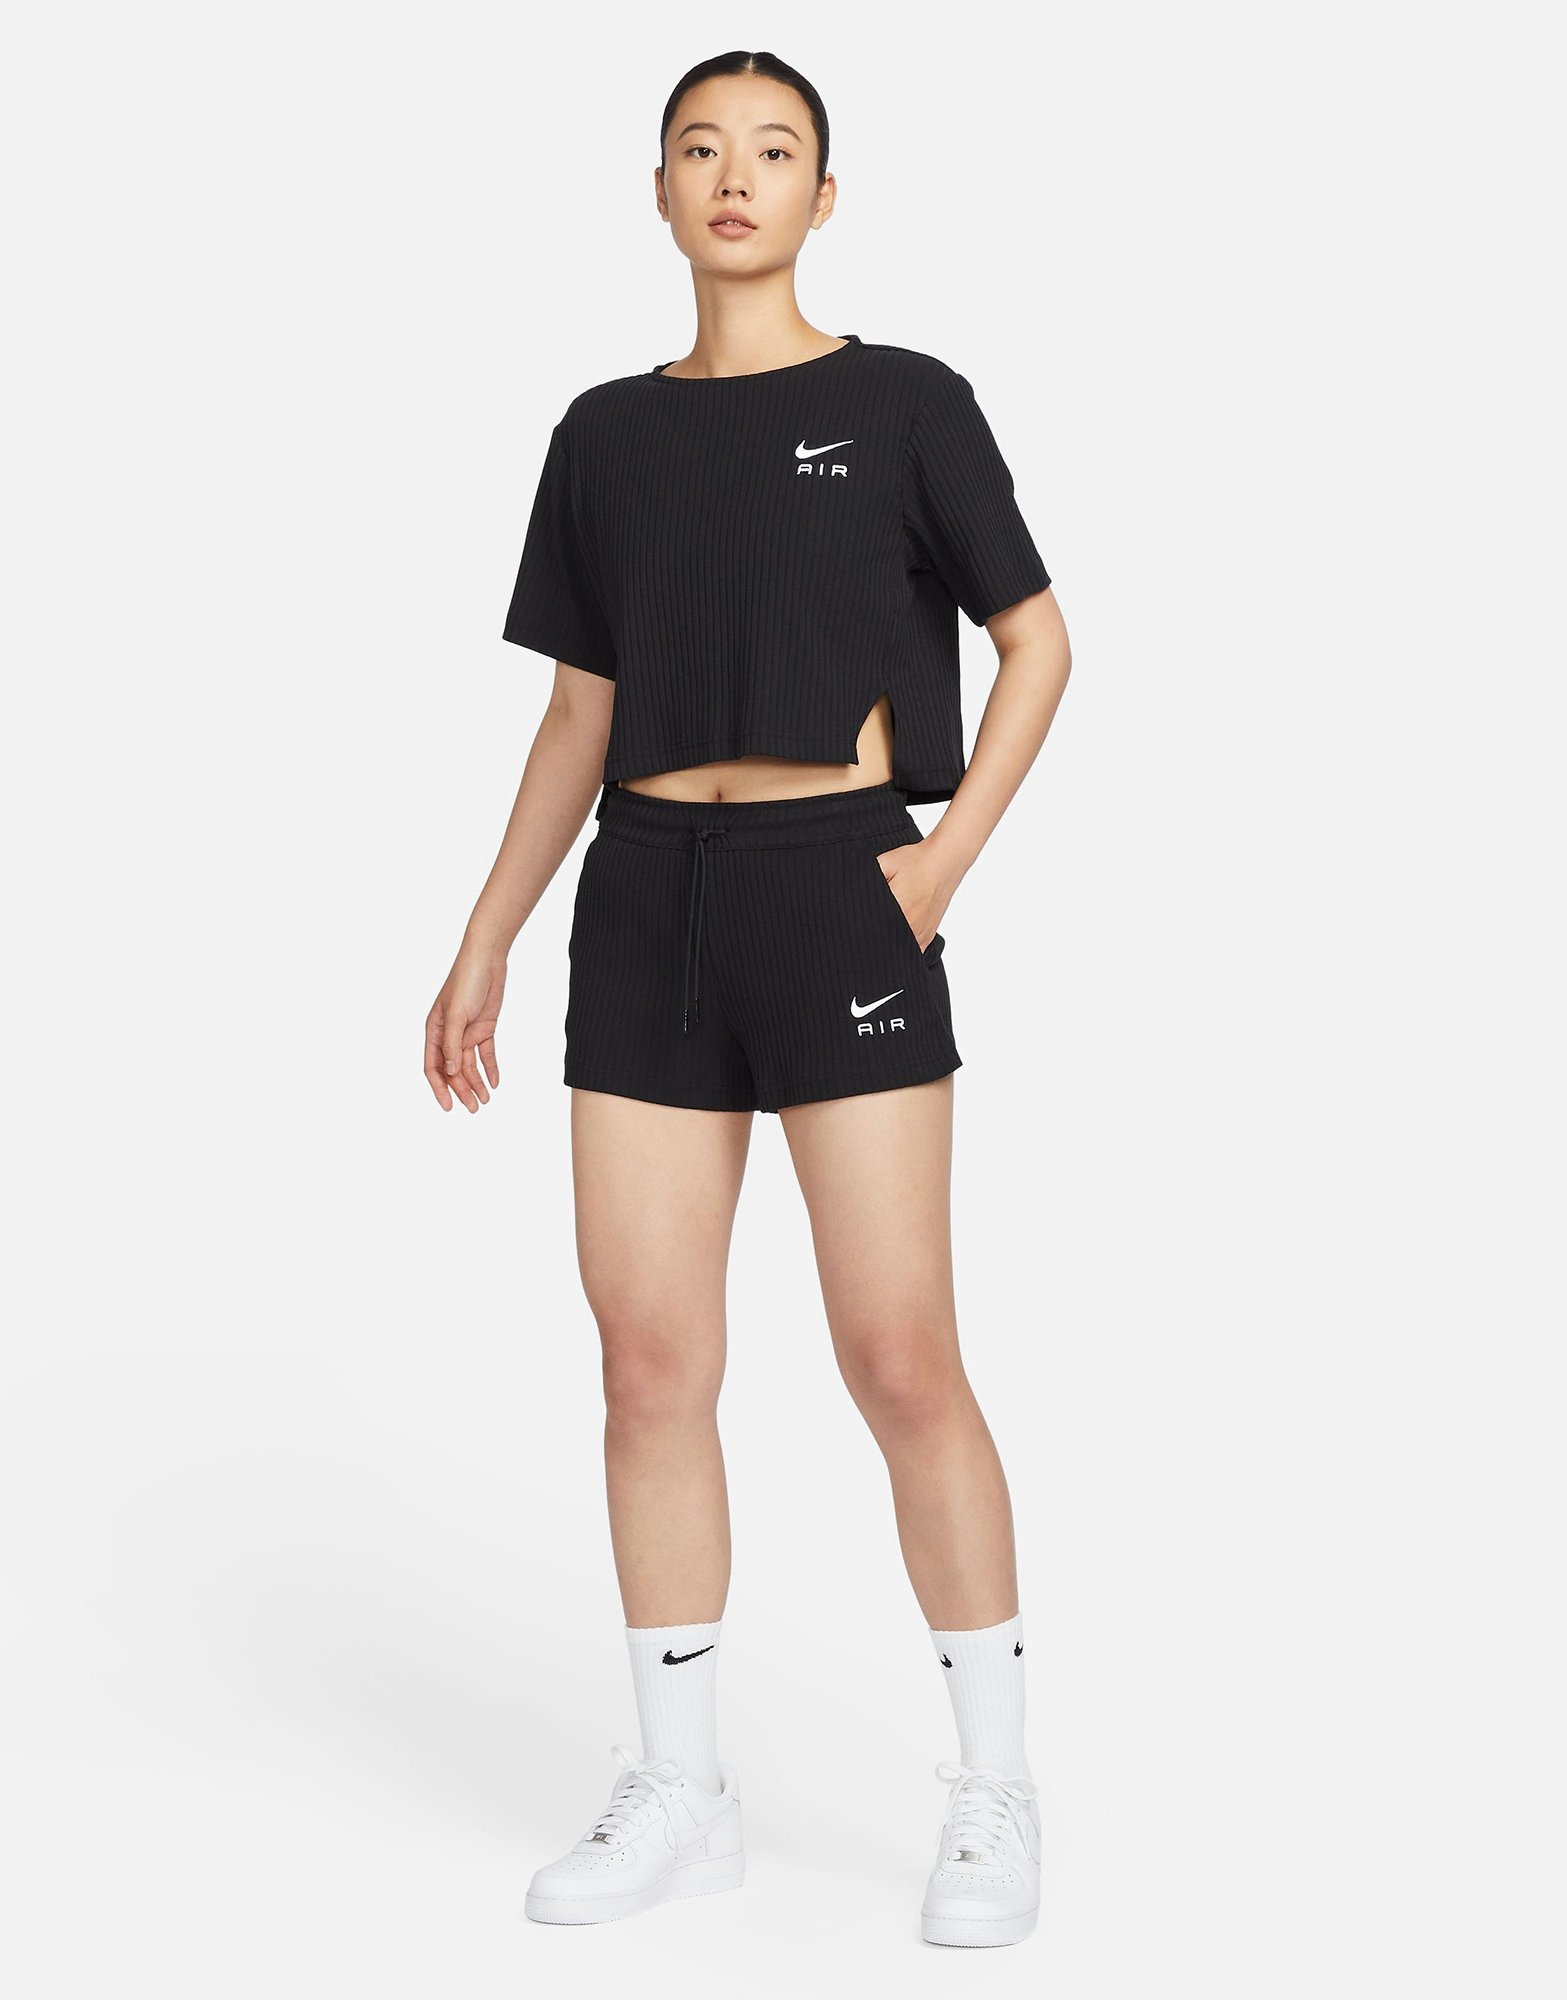 Black Nike Sportswear Ribbed Jersey Shorts Women's - JD Sports Singapore